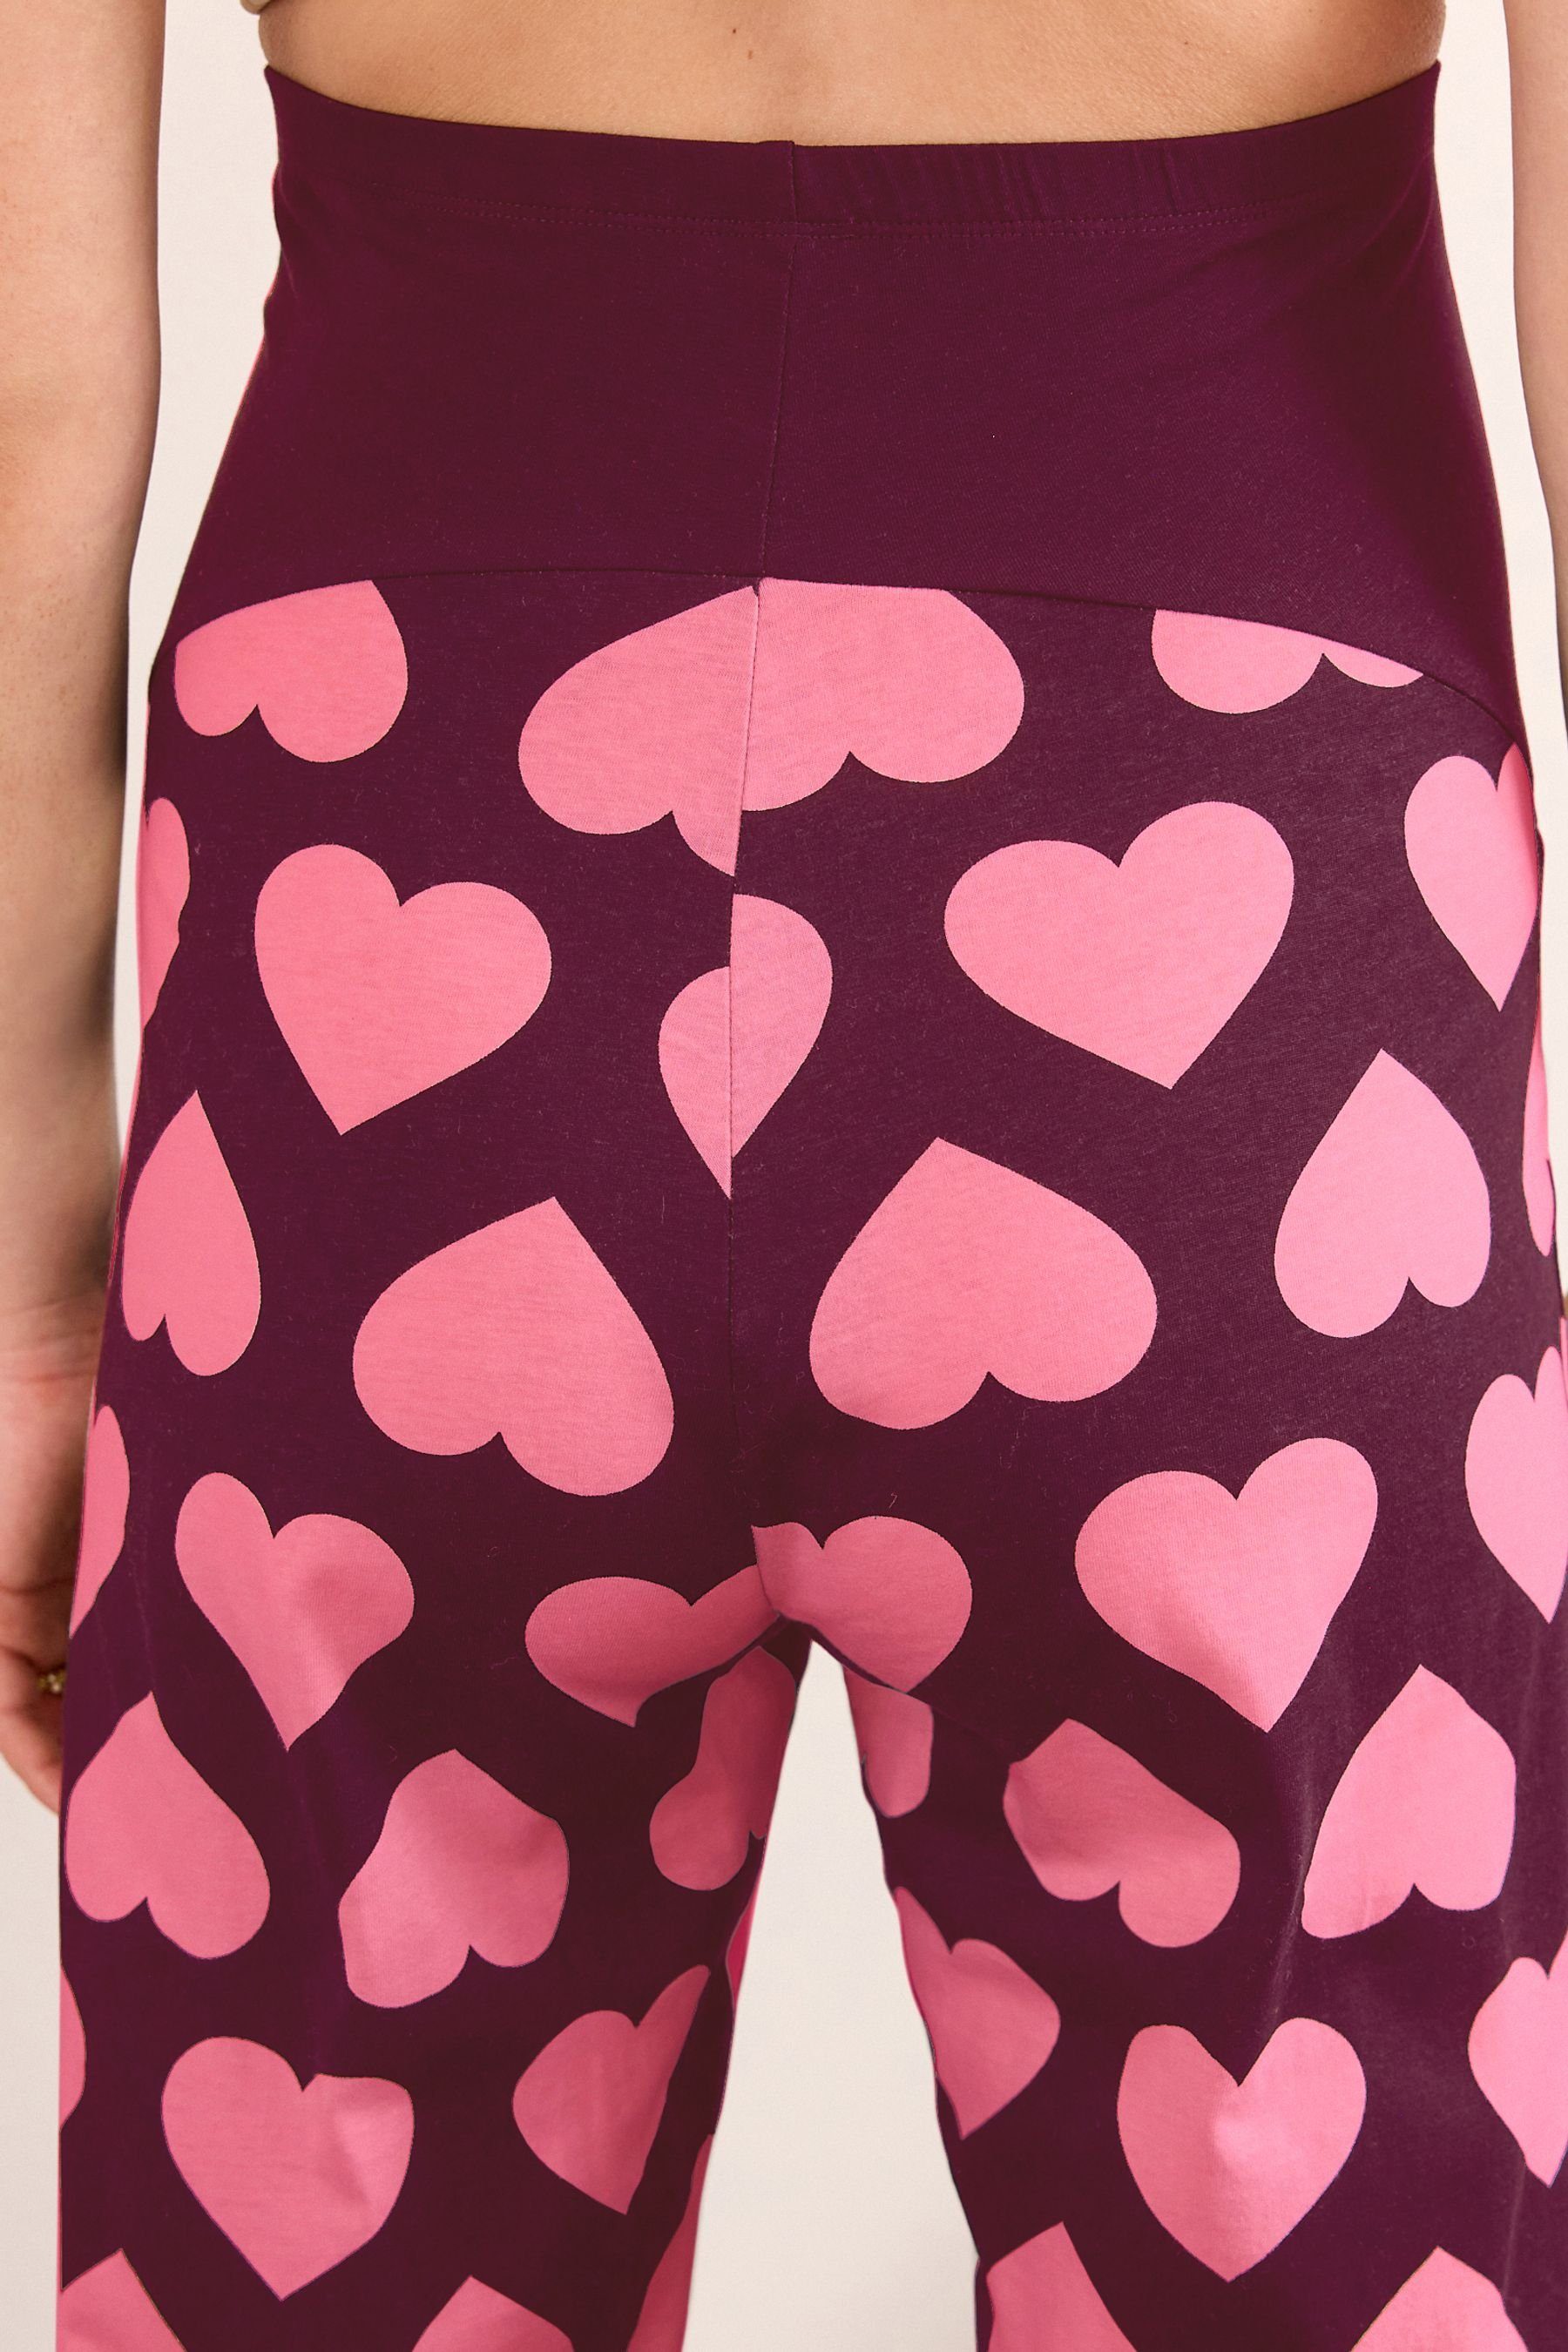 Next Umstandspyjama Baumwoll-Pyjama, Umstandsmode (2 Pink tlg) Heart